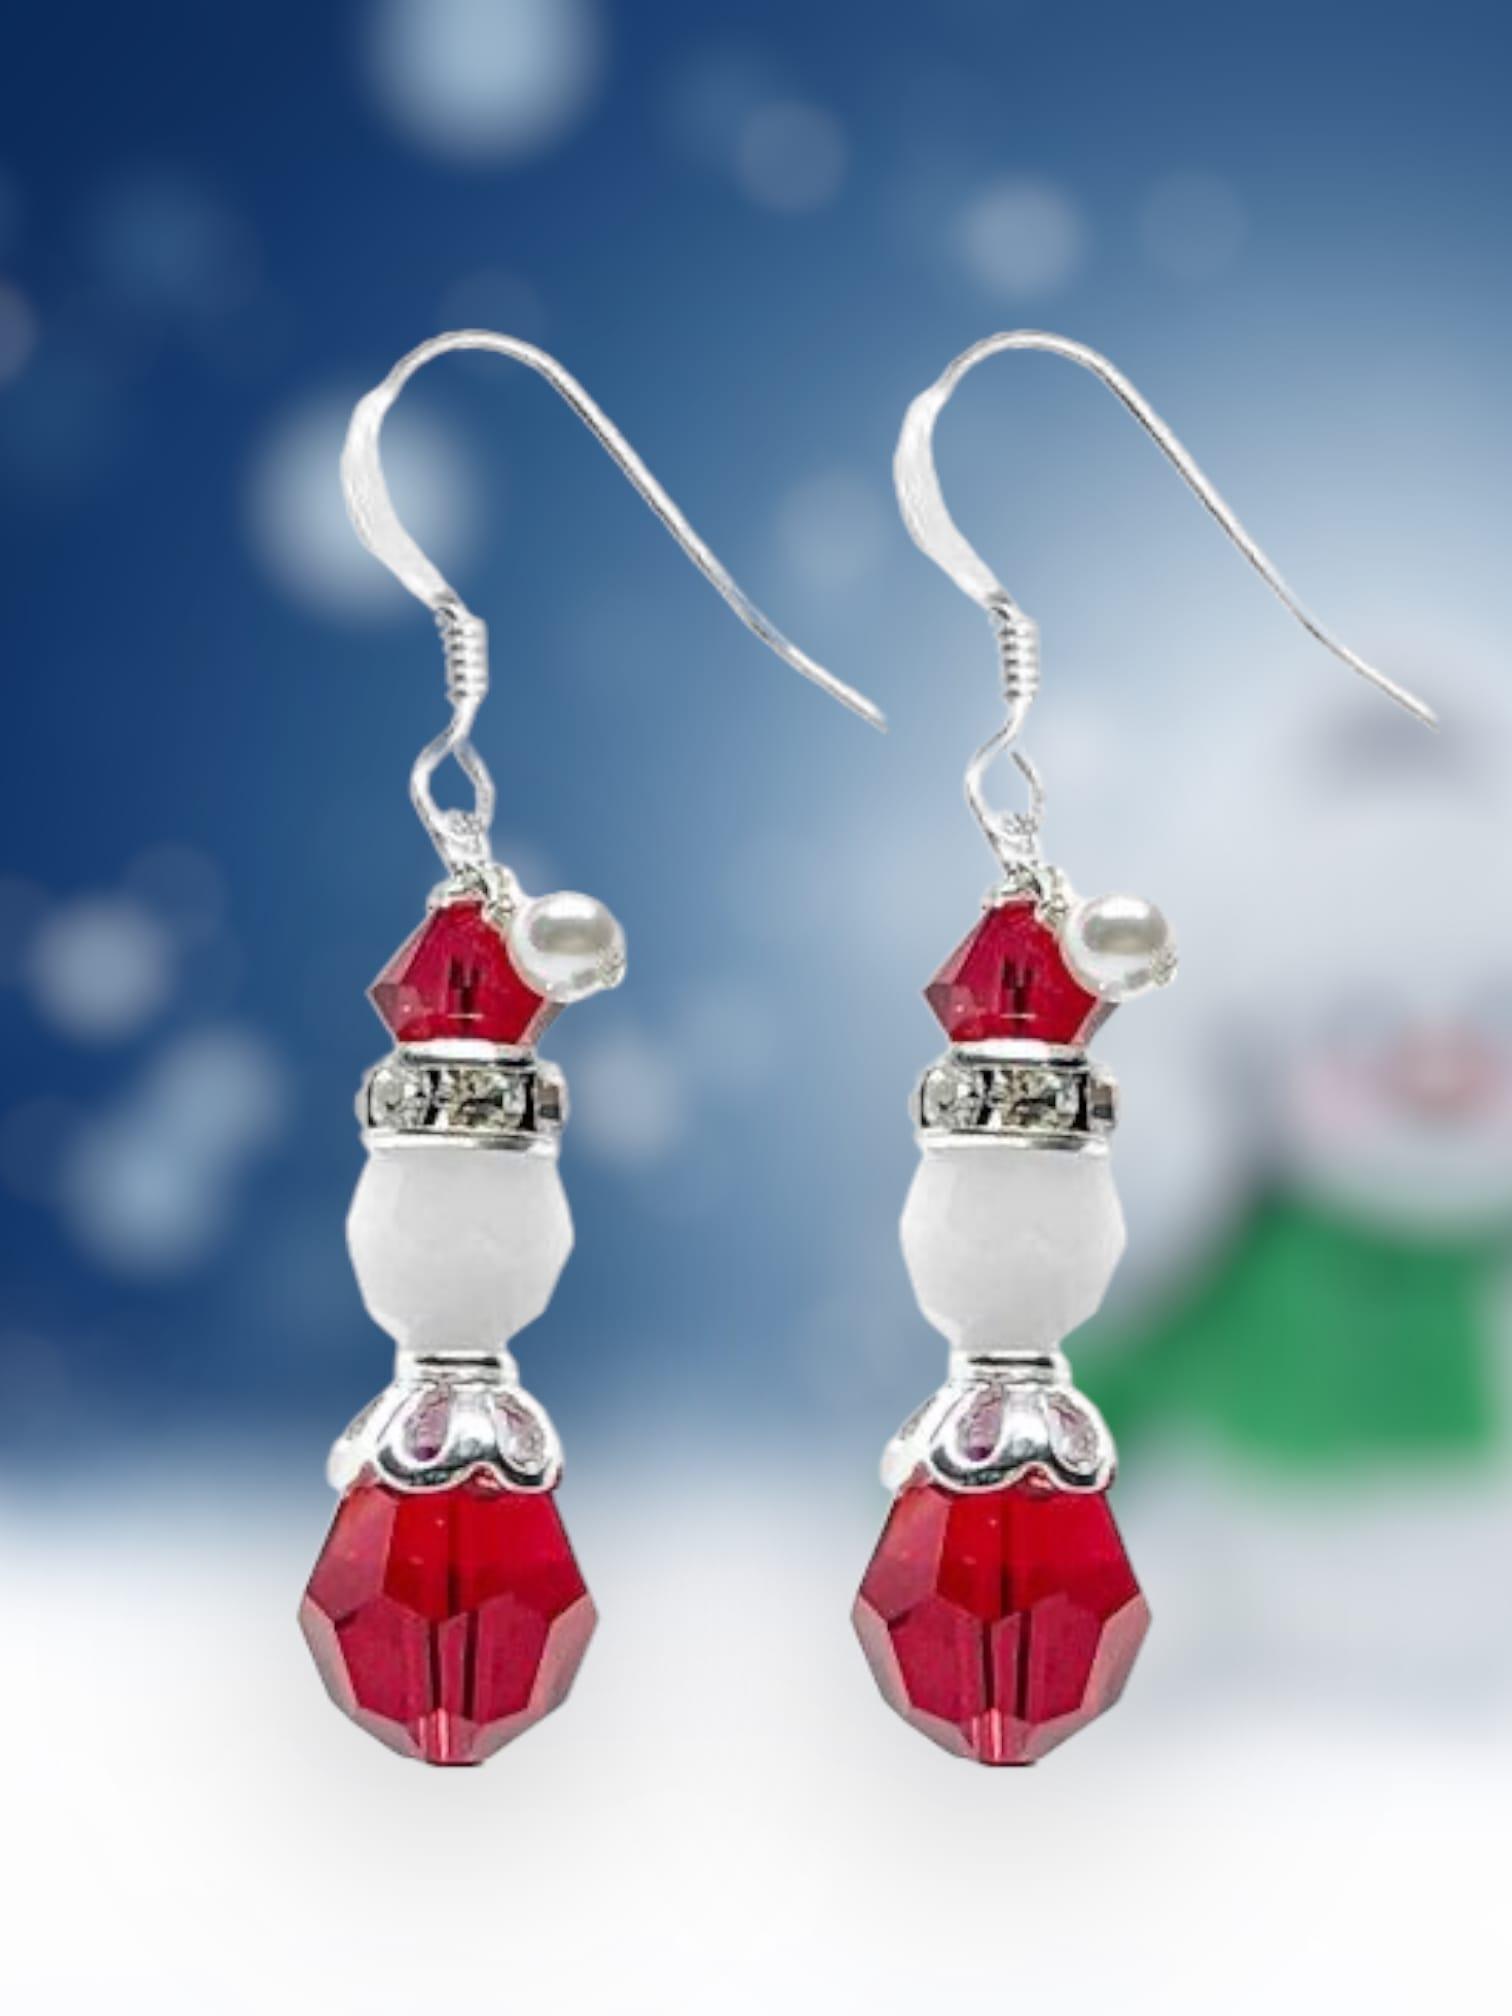 Mrs Claus Christmas Earring Kit - Too Cute Beads